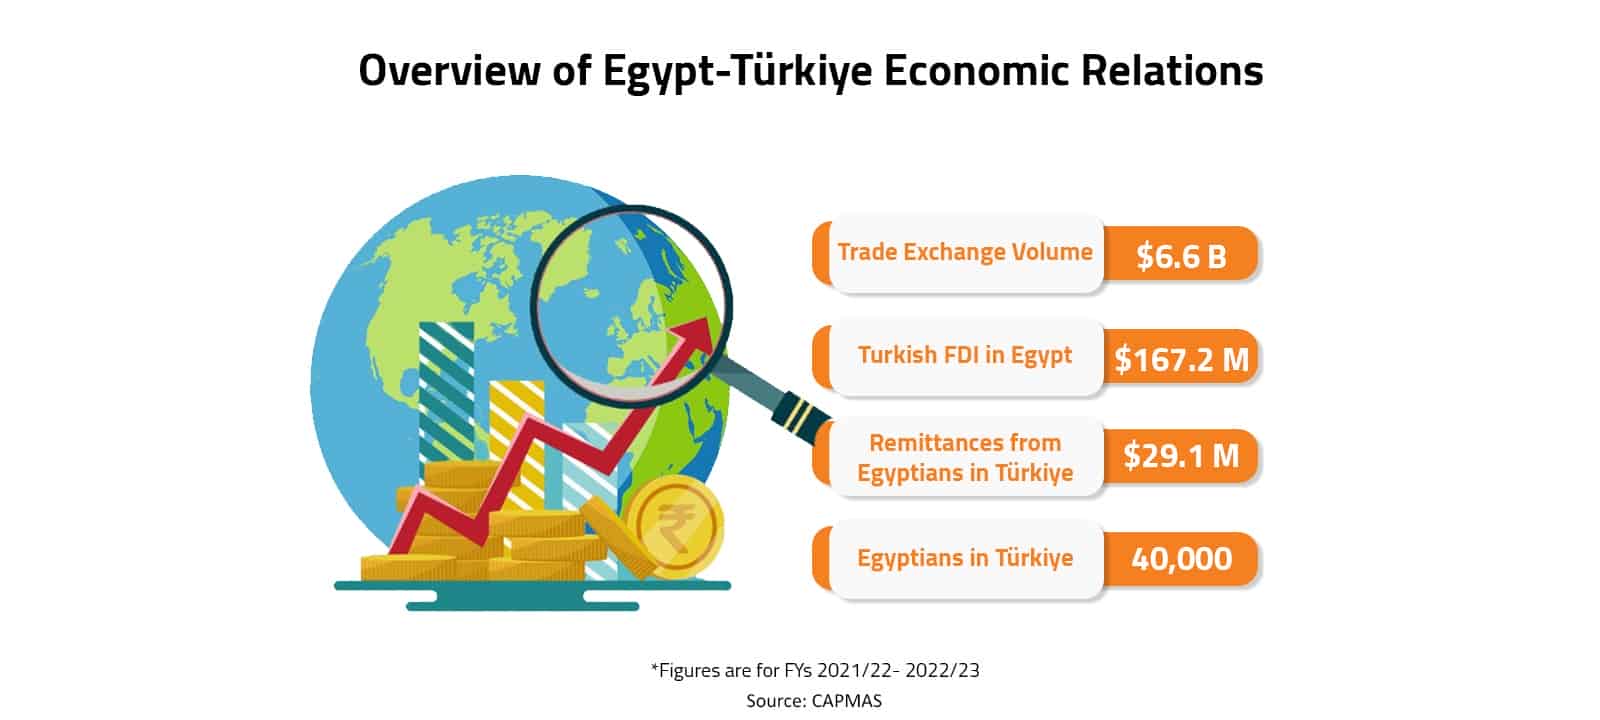 Overview of Egypt-Türkiye Economic Relations